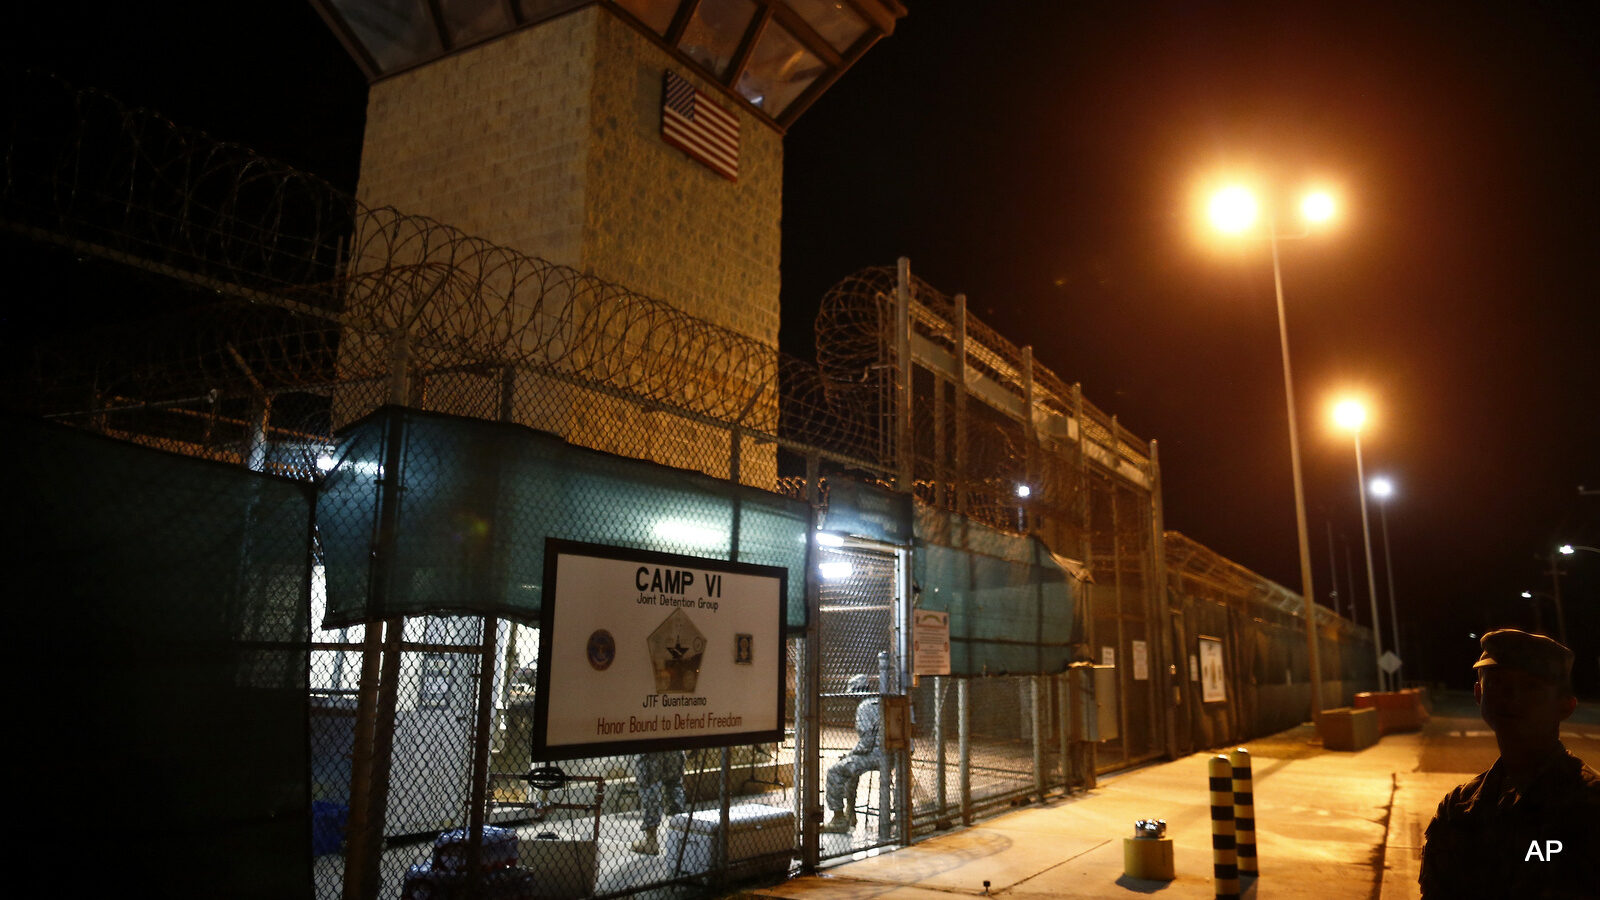 The entrance to Camp VI detention facility at Guantanamo Bay